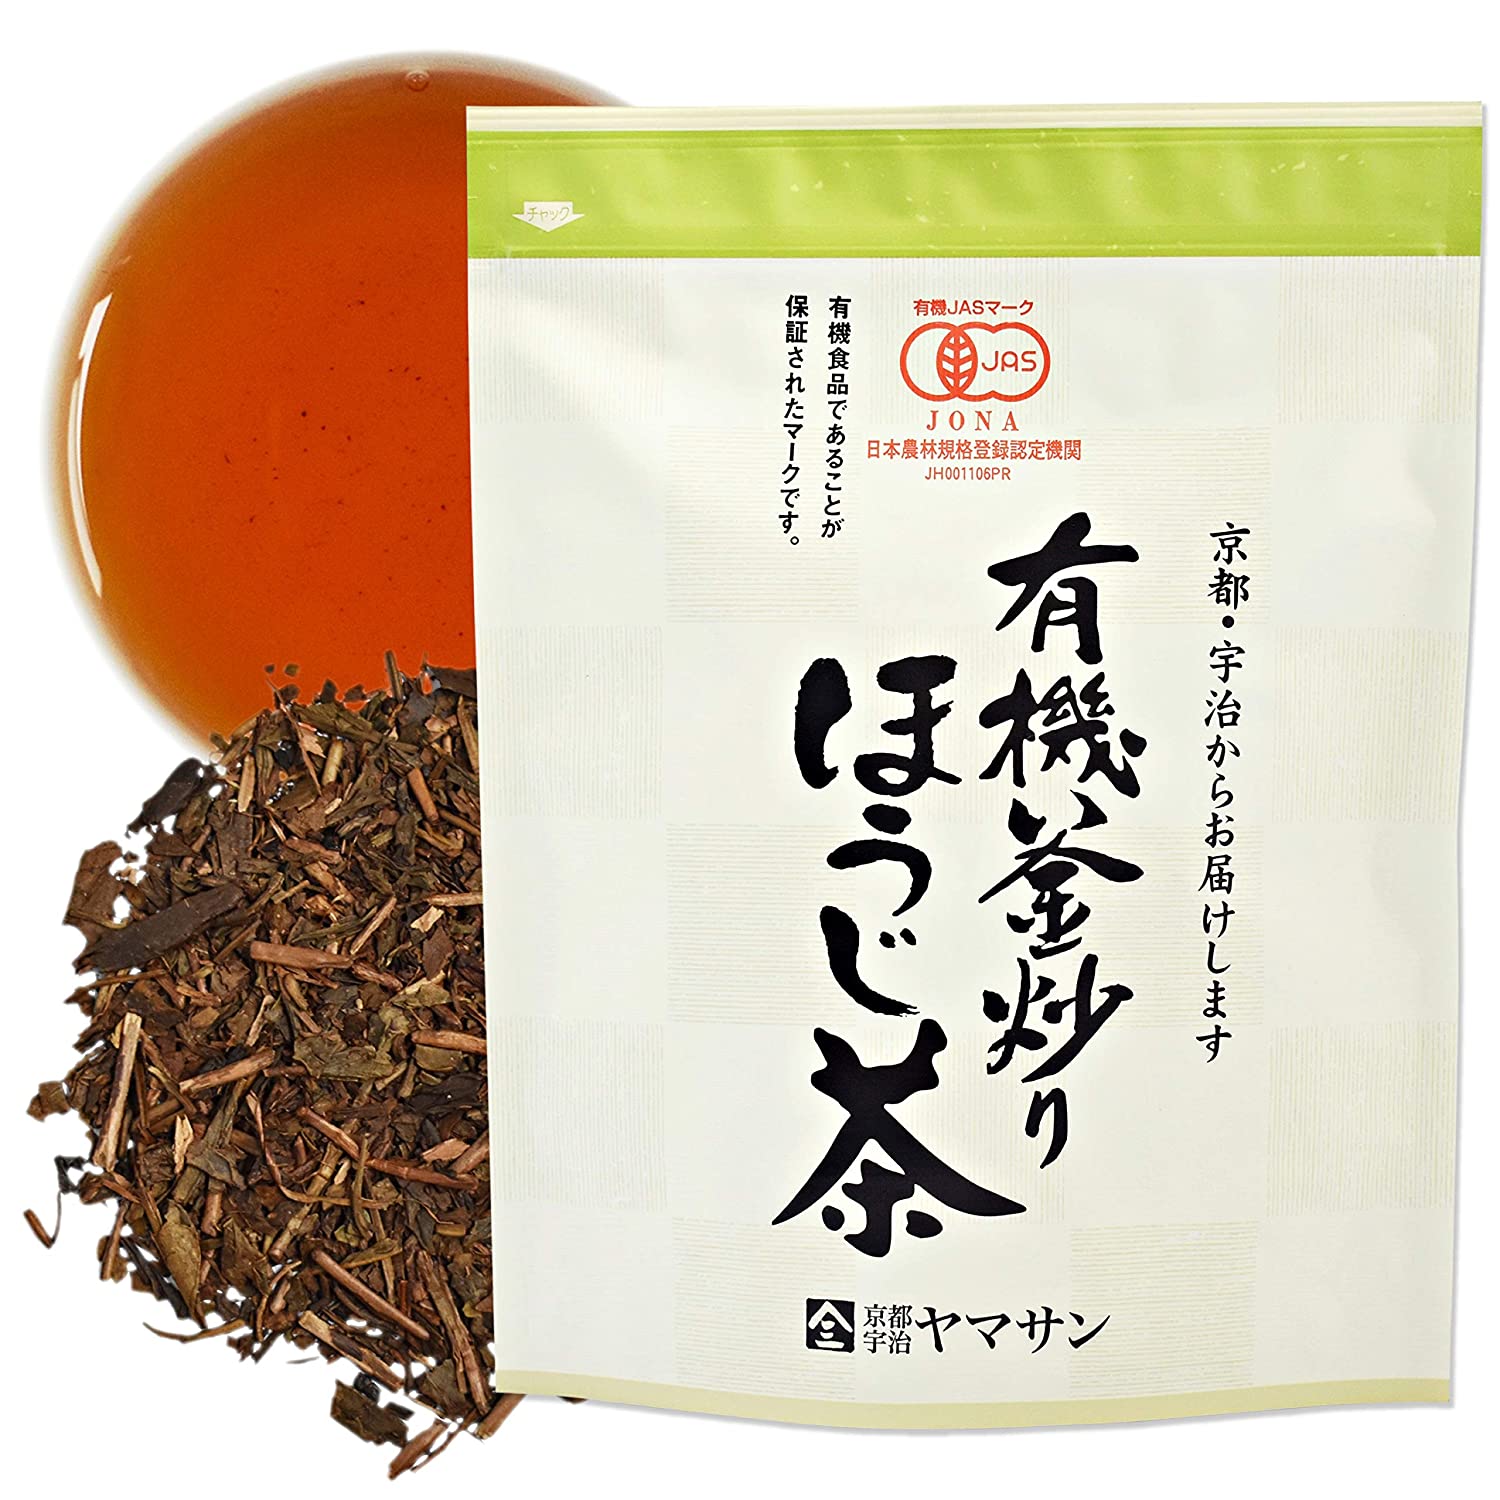 hojicha green tea pouch and tea mix